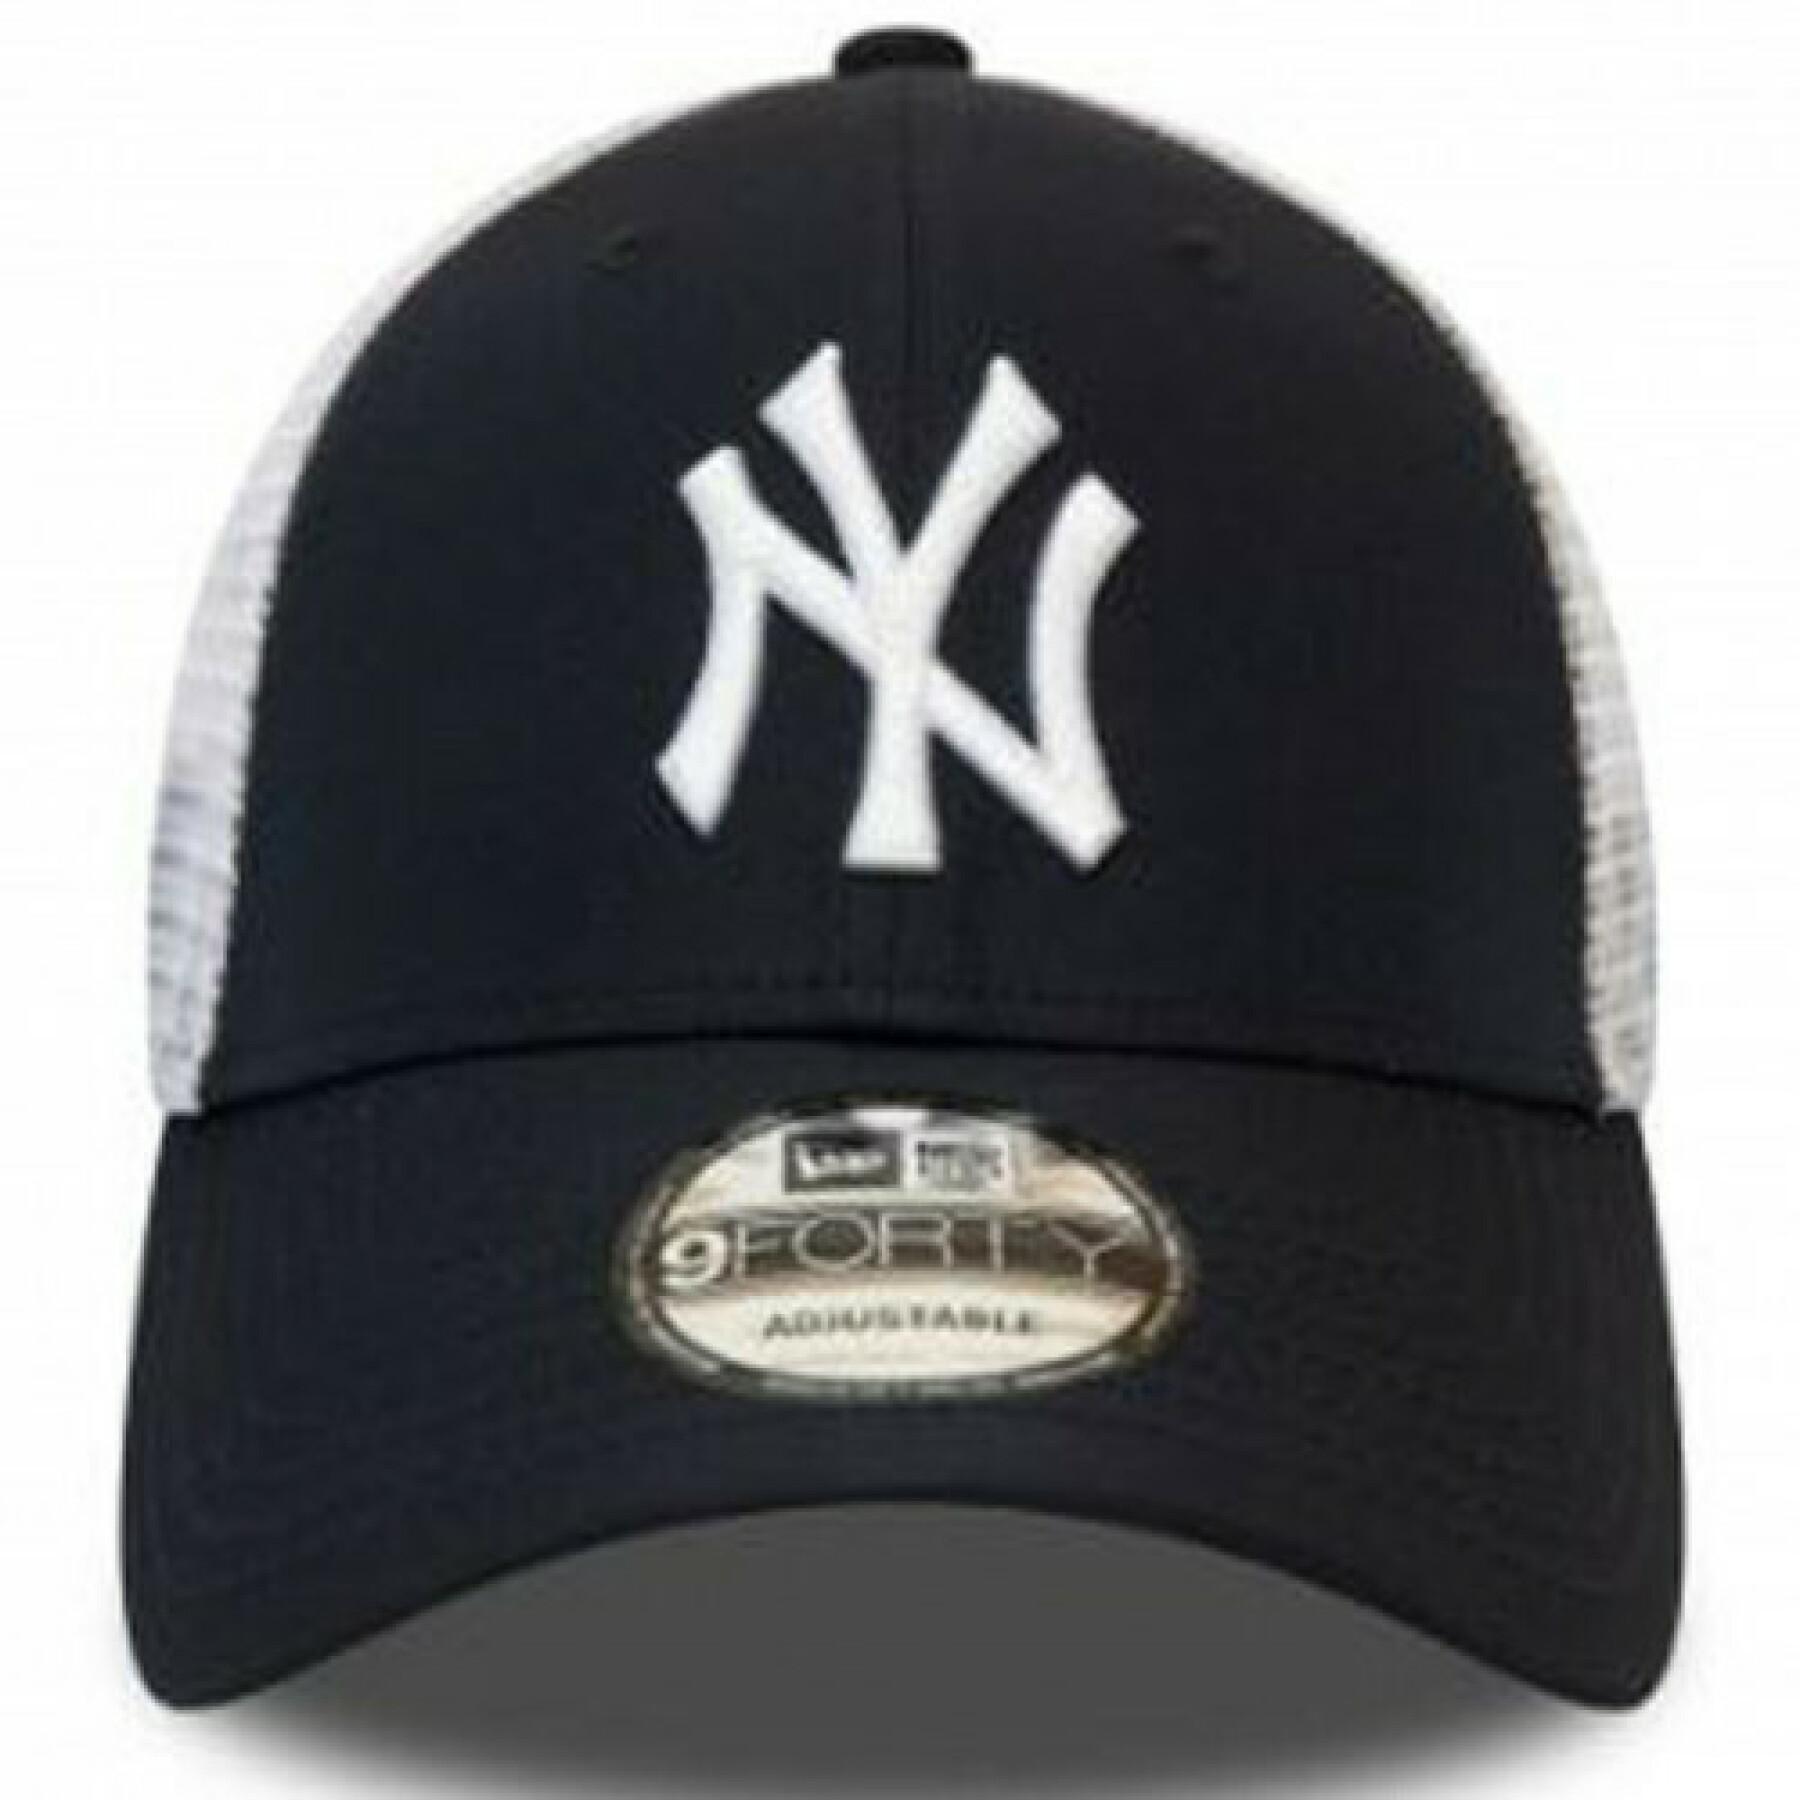 Kappe New Era 940 New York Yankees Summer League OTC